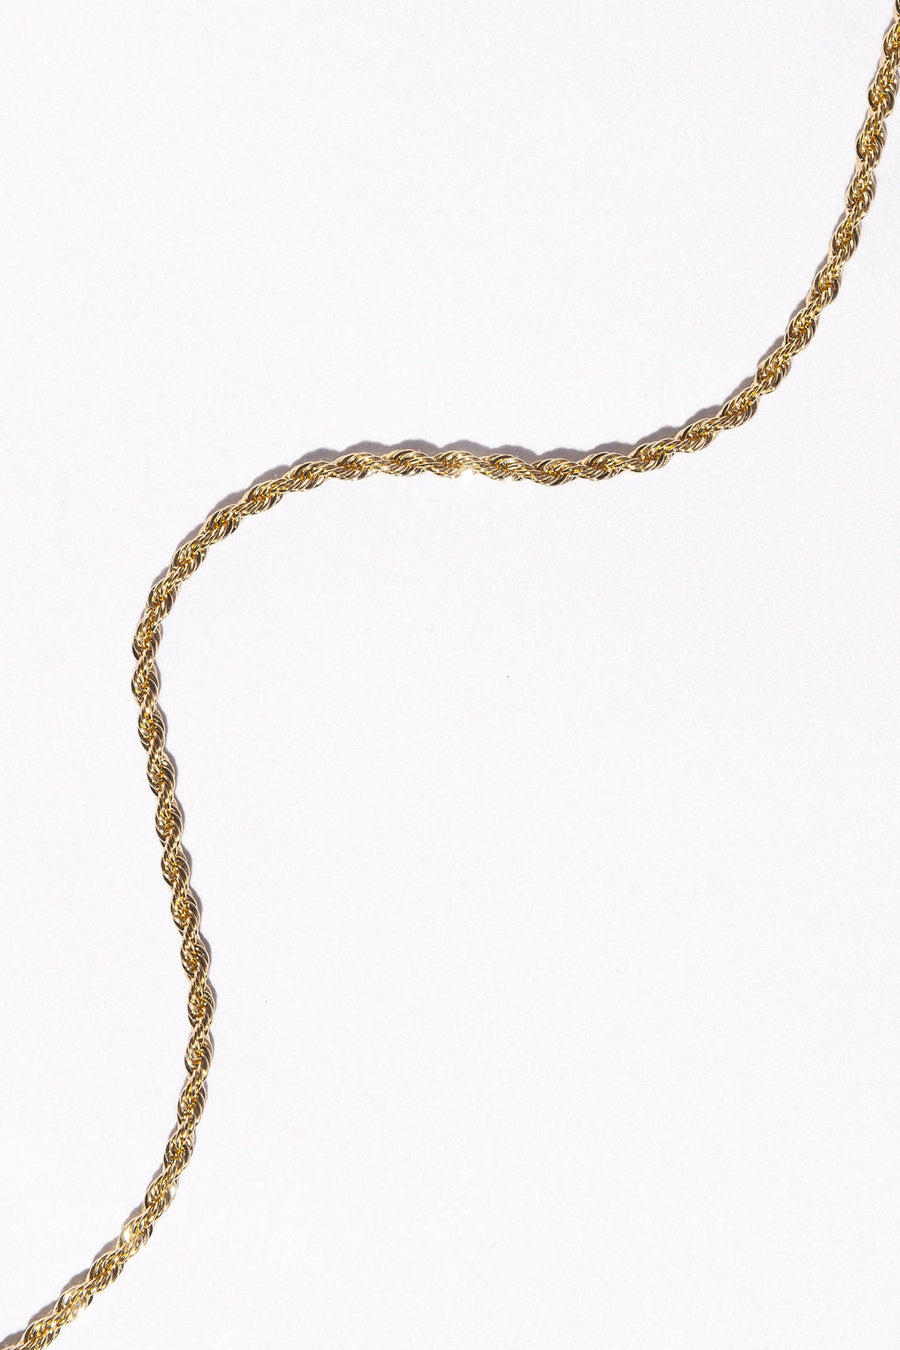 Dona Italia Jewelry Gold / 16 Inches Love Stoned Pearl Necklace